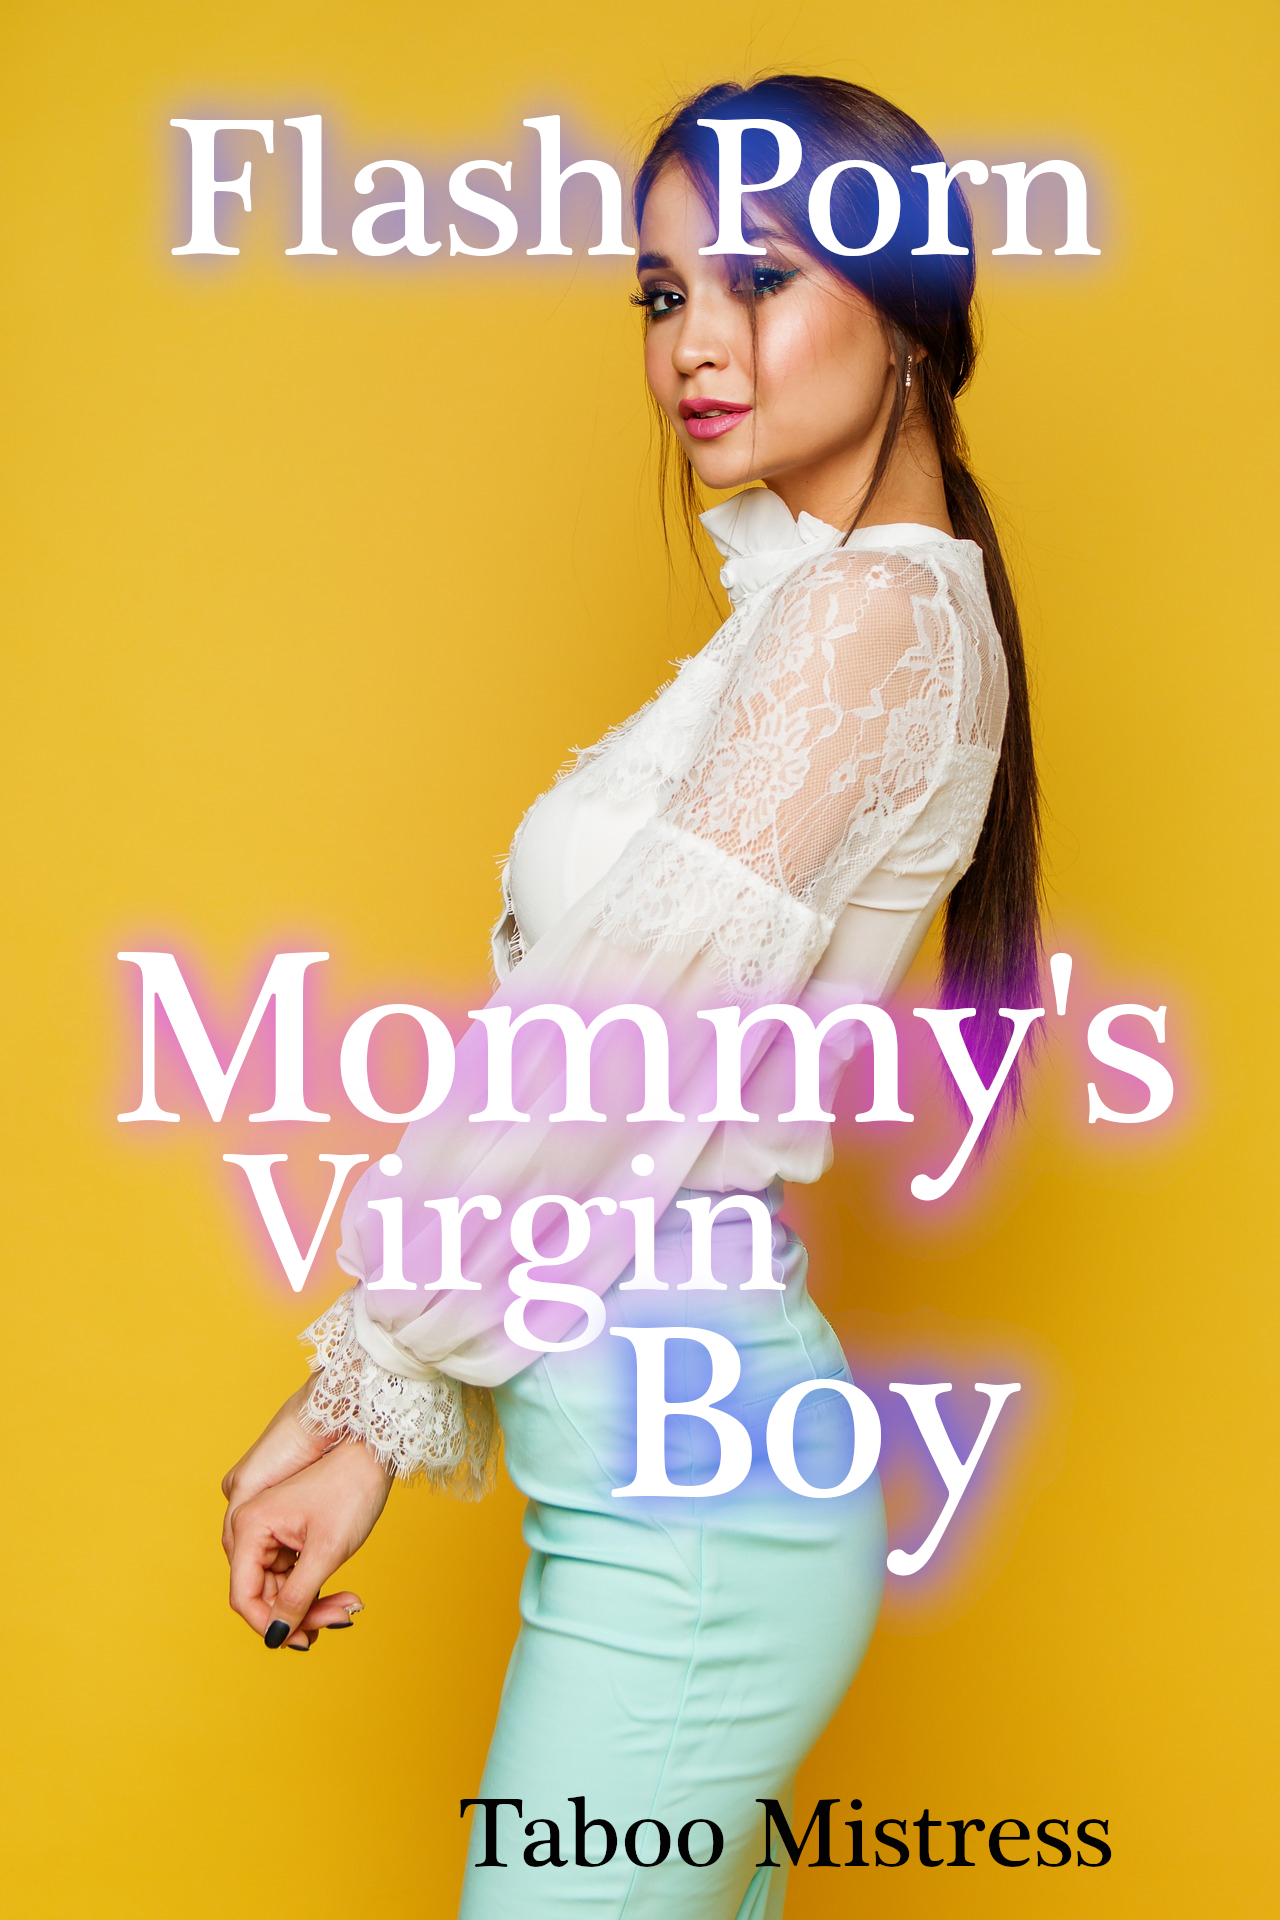 Dirty Taboo Porn - Flash Porn: Mommy's Virgin Boy, an Ebook by Taboo Mistress